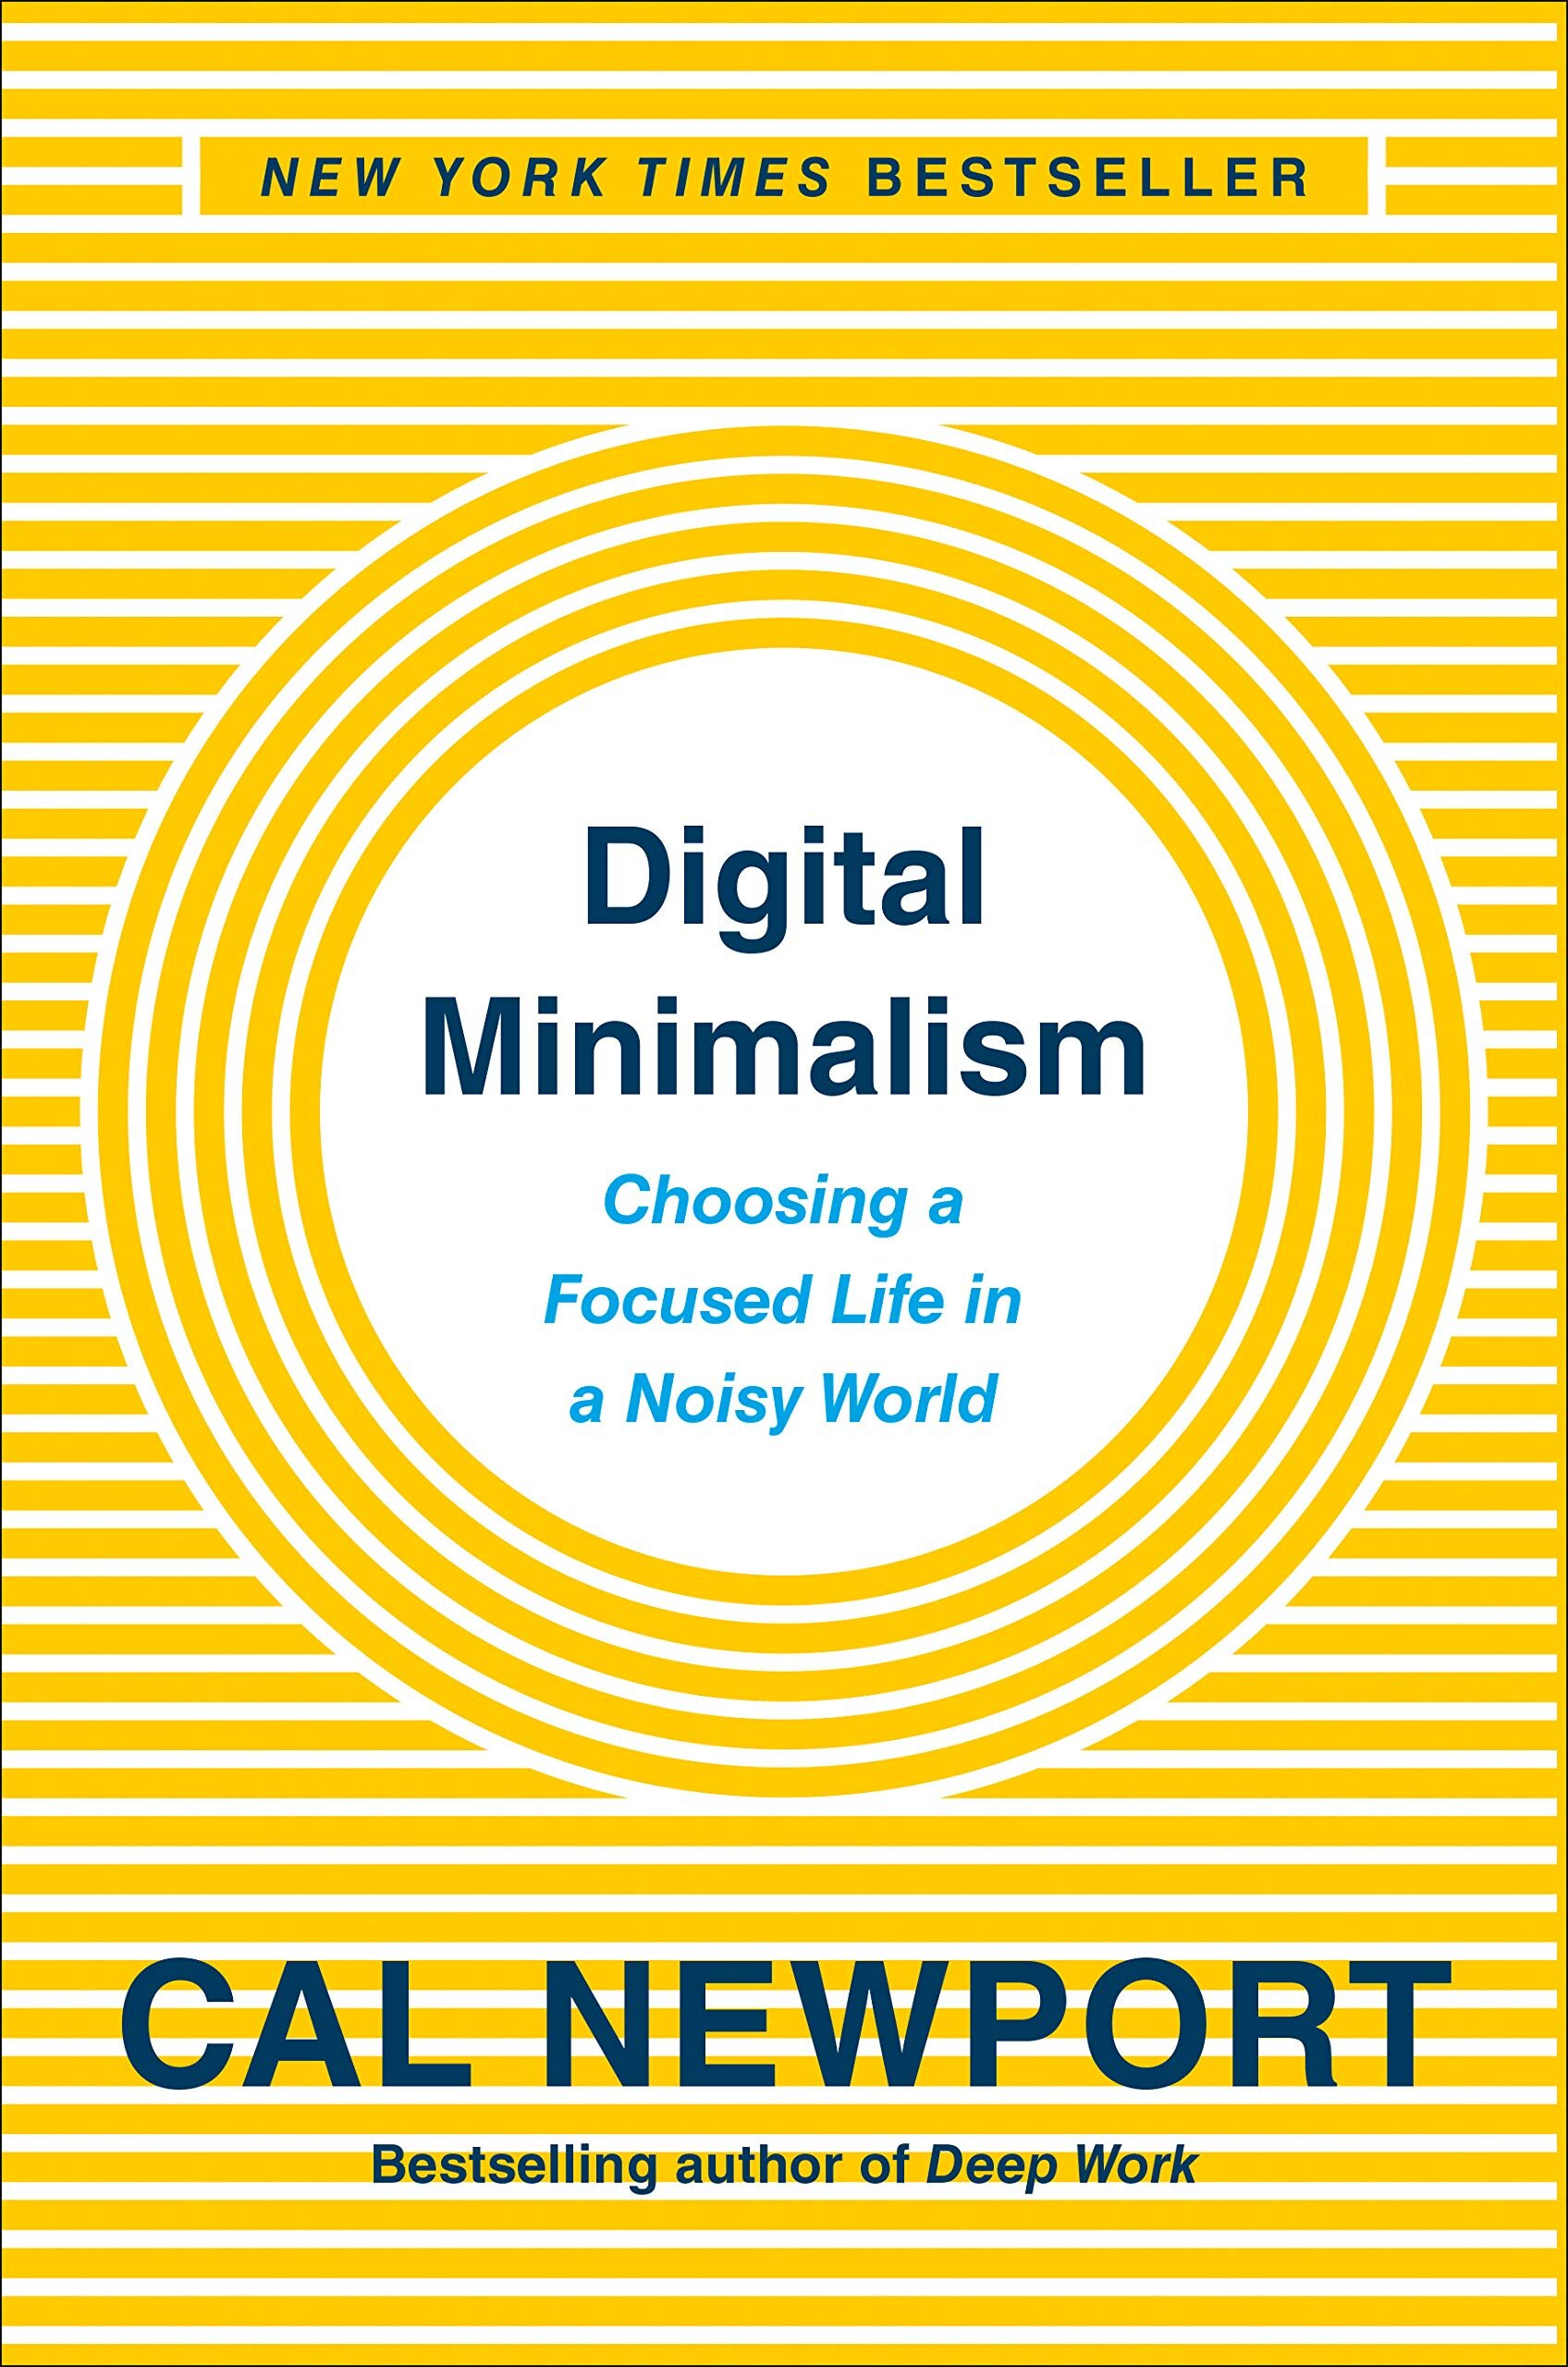 Science Digital Minimalism Choosing a Focused Life in a Noisy World by Cal Newport.jpg